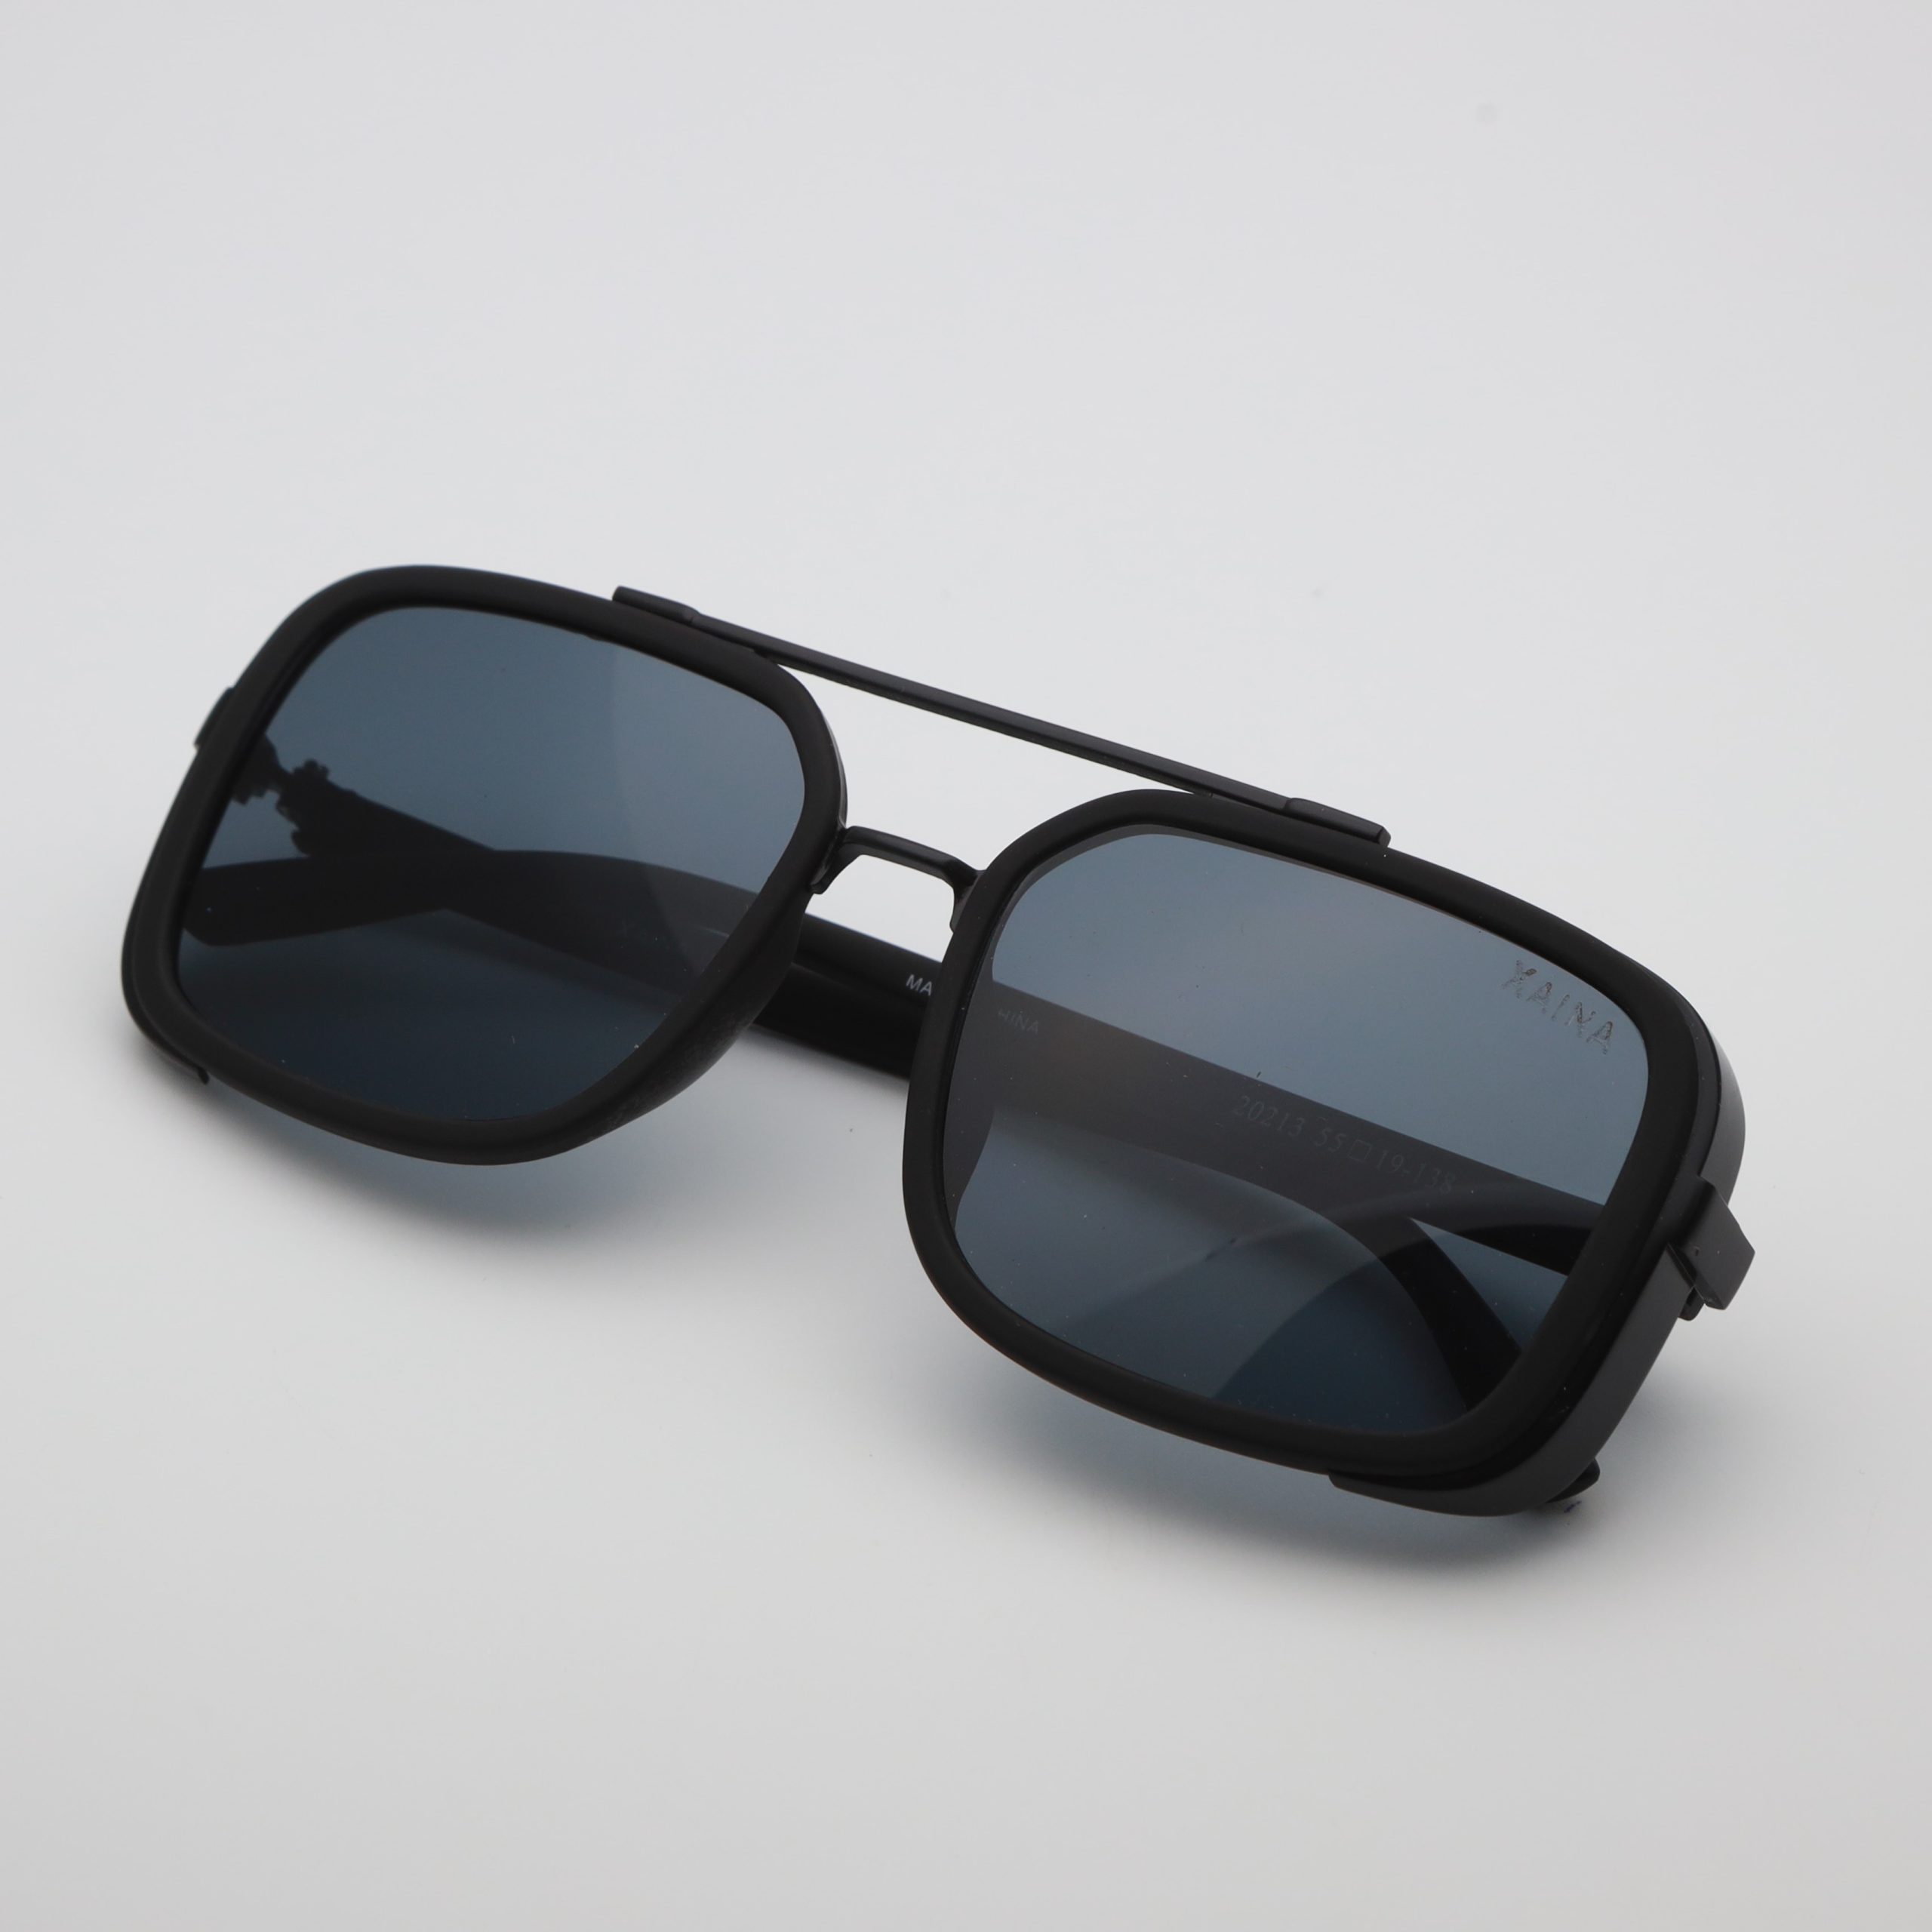 https://xaina.com/wp-content/uploads/2023/02/iron-man-sunglasses-shades-3-scaled.jpg